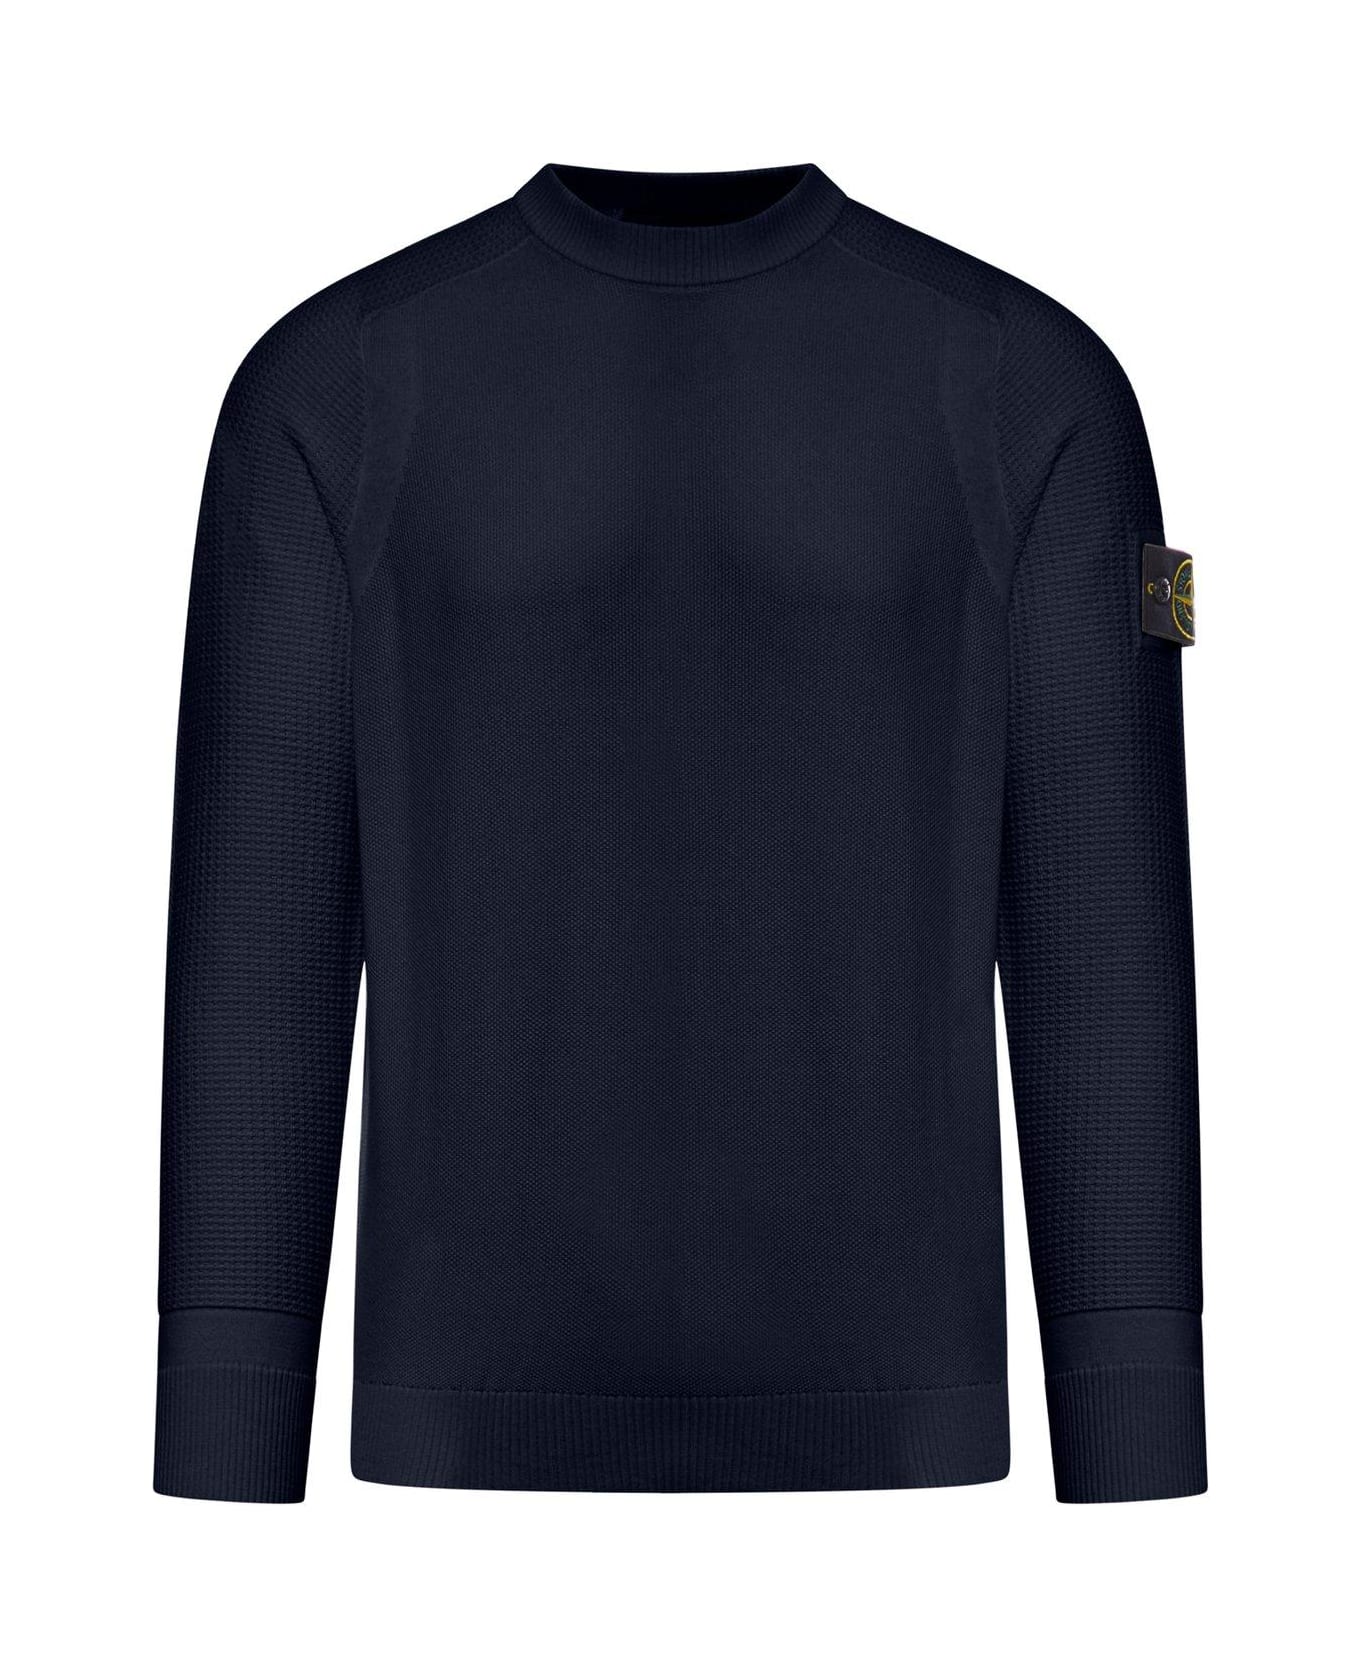 Stone Island Crewneck Long-sleeved Sweater - Navy blue フリース